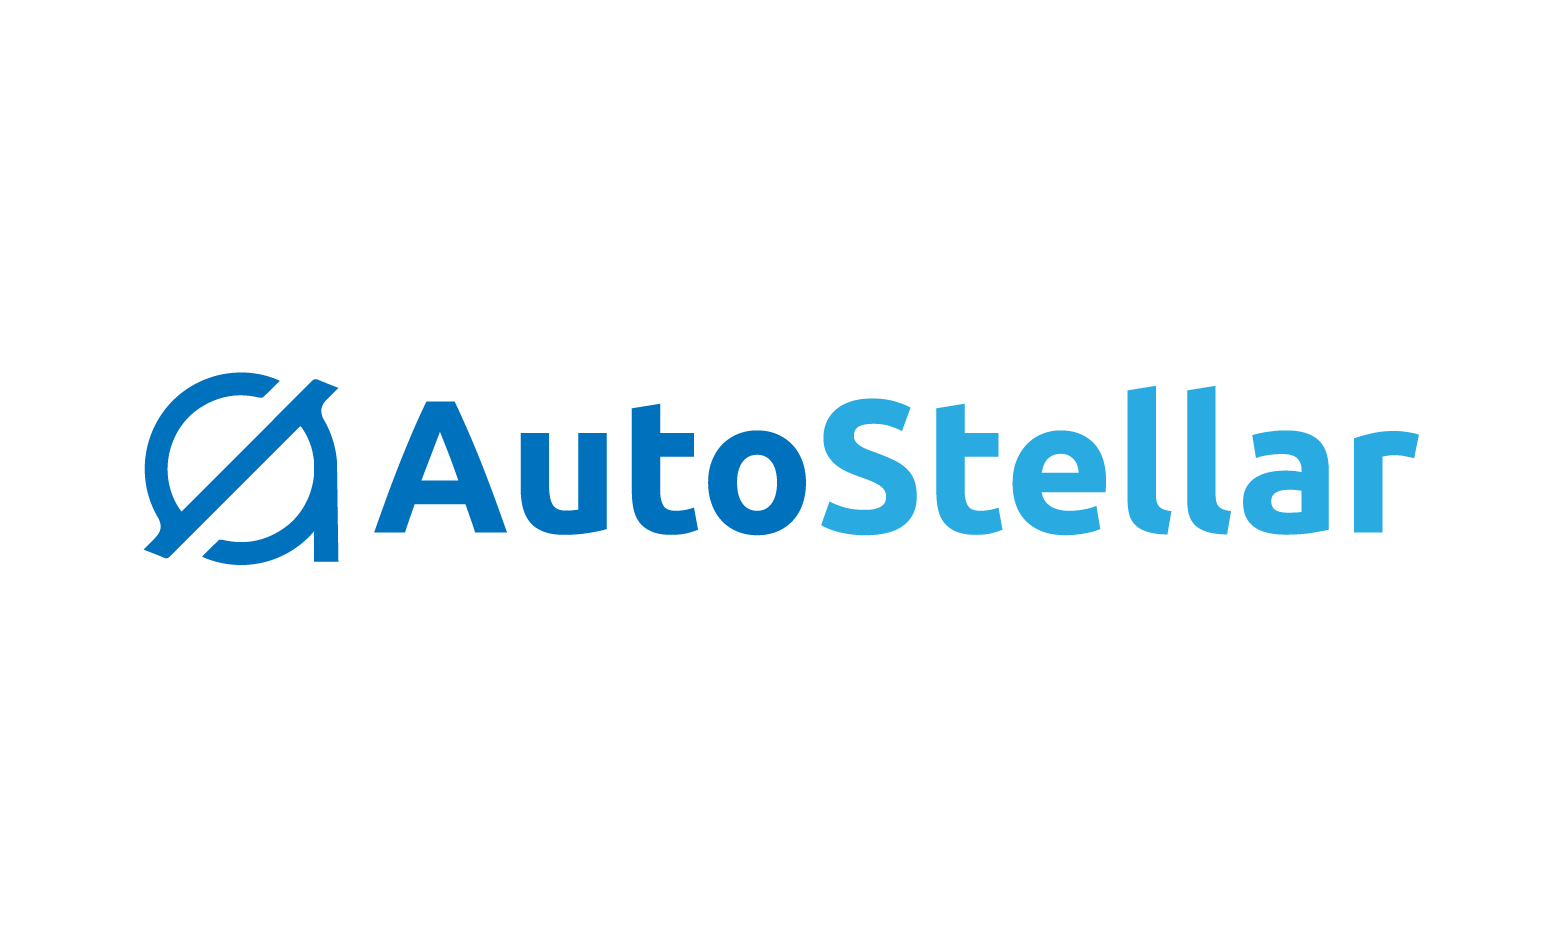 AutoStellar.com - Creative brandable domain for sale